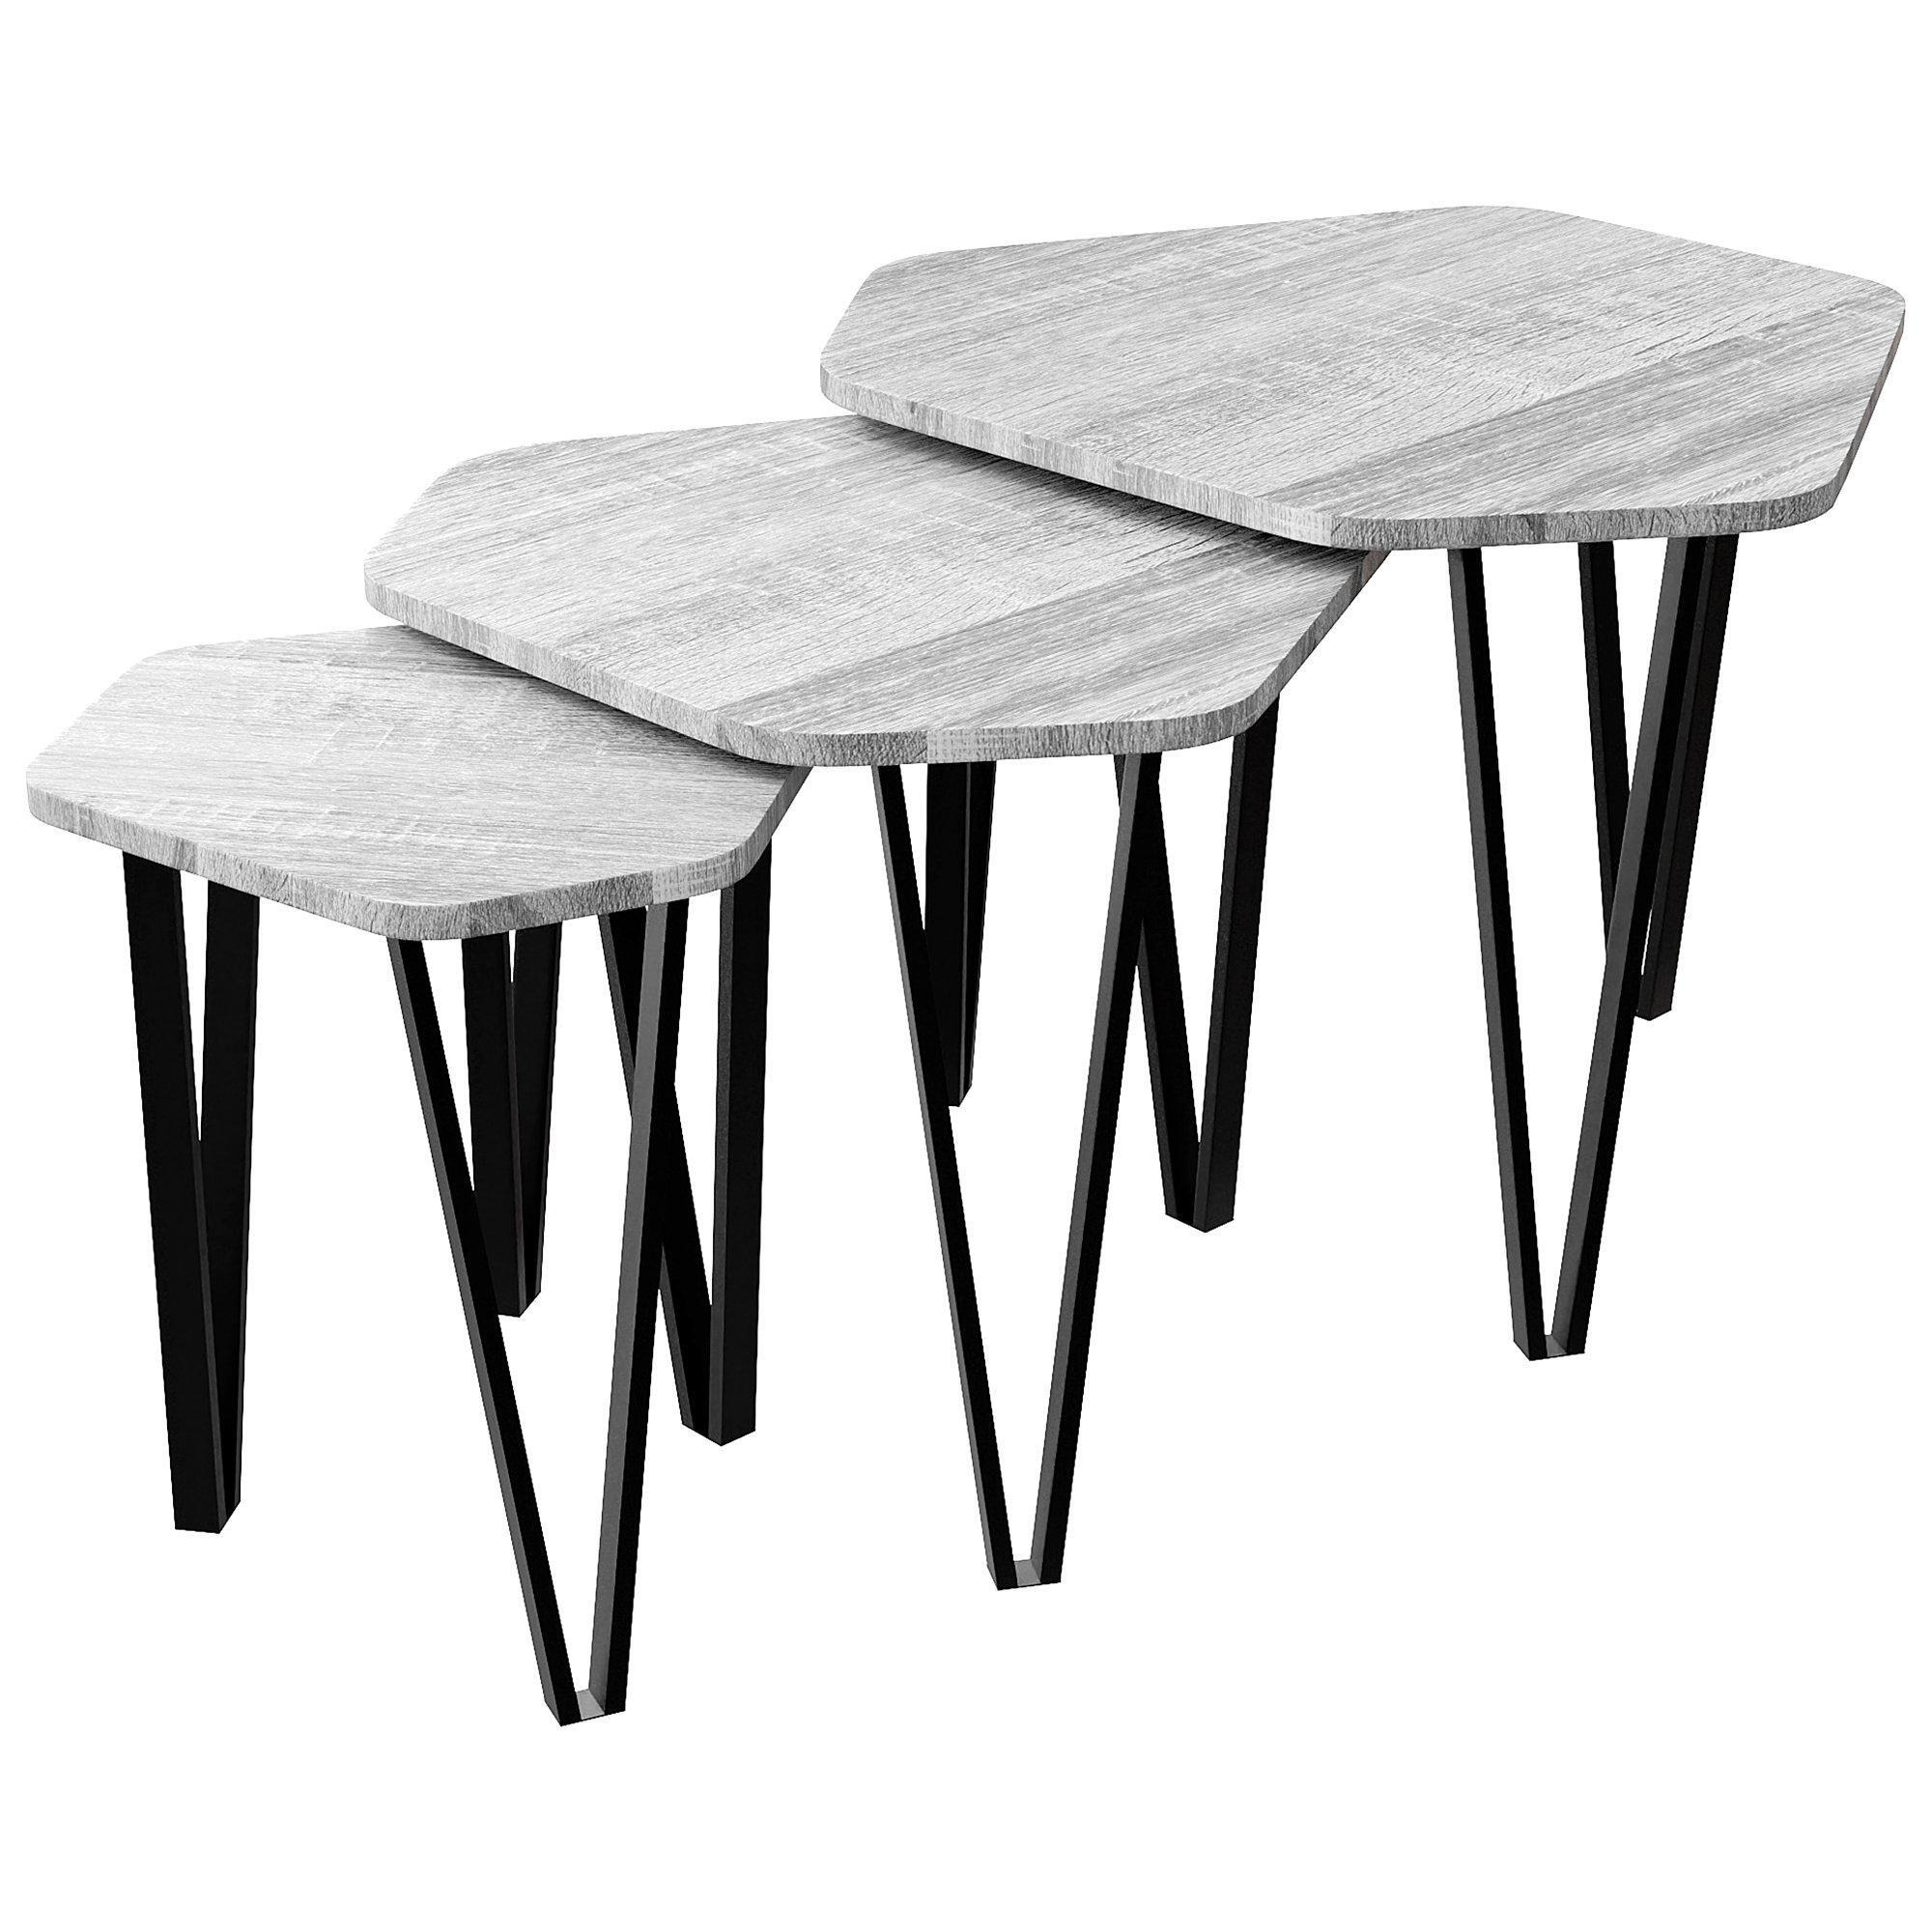 Vida Designs Brooklyn Nest of 3 Tables Set Of 3 MDF Living Room Coffee Side Table Furniture - image 1